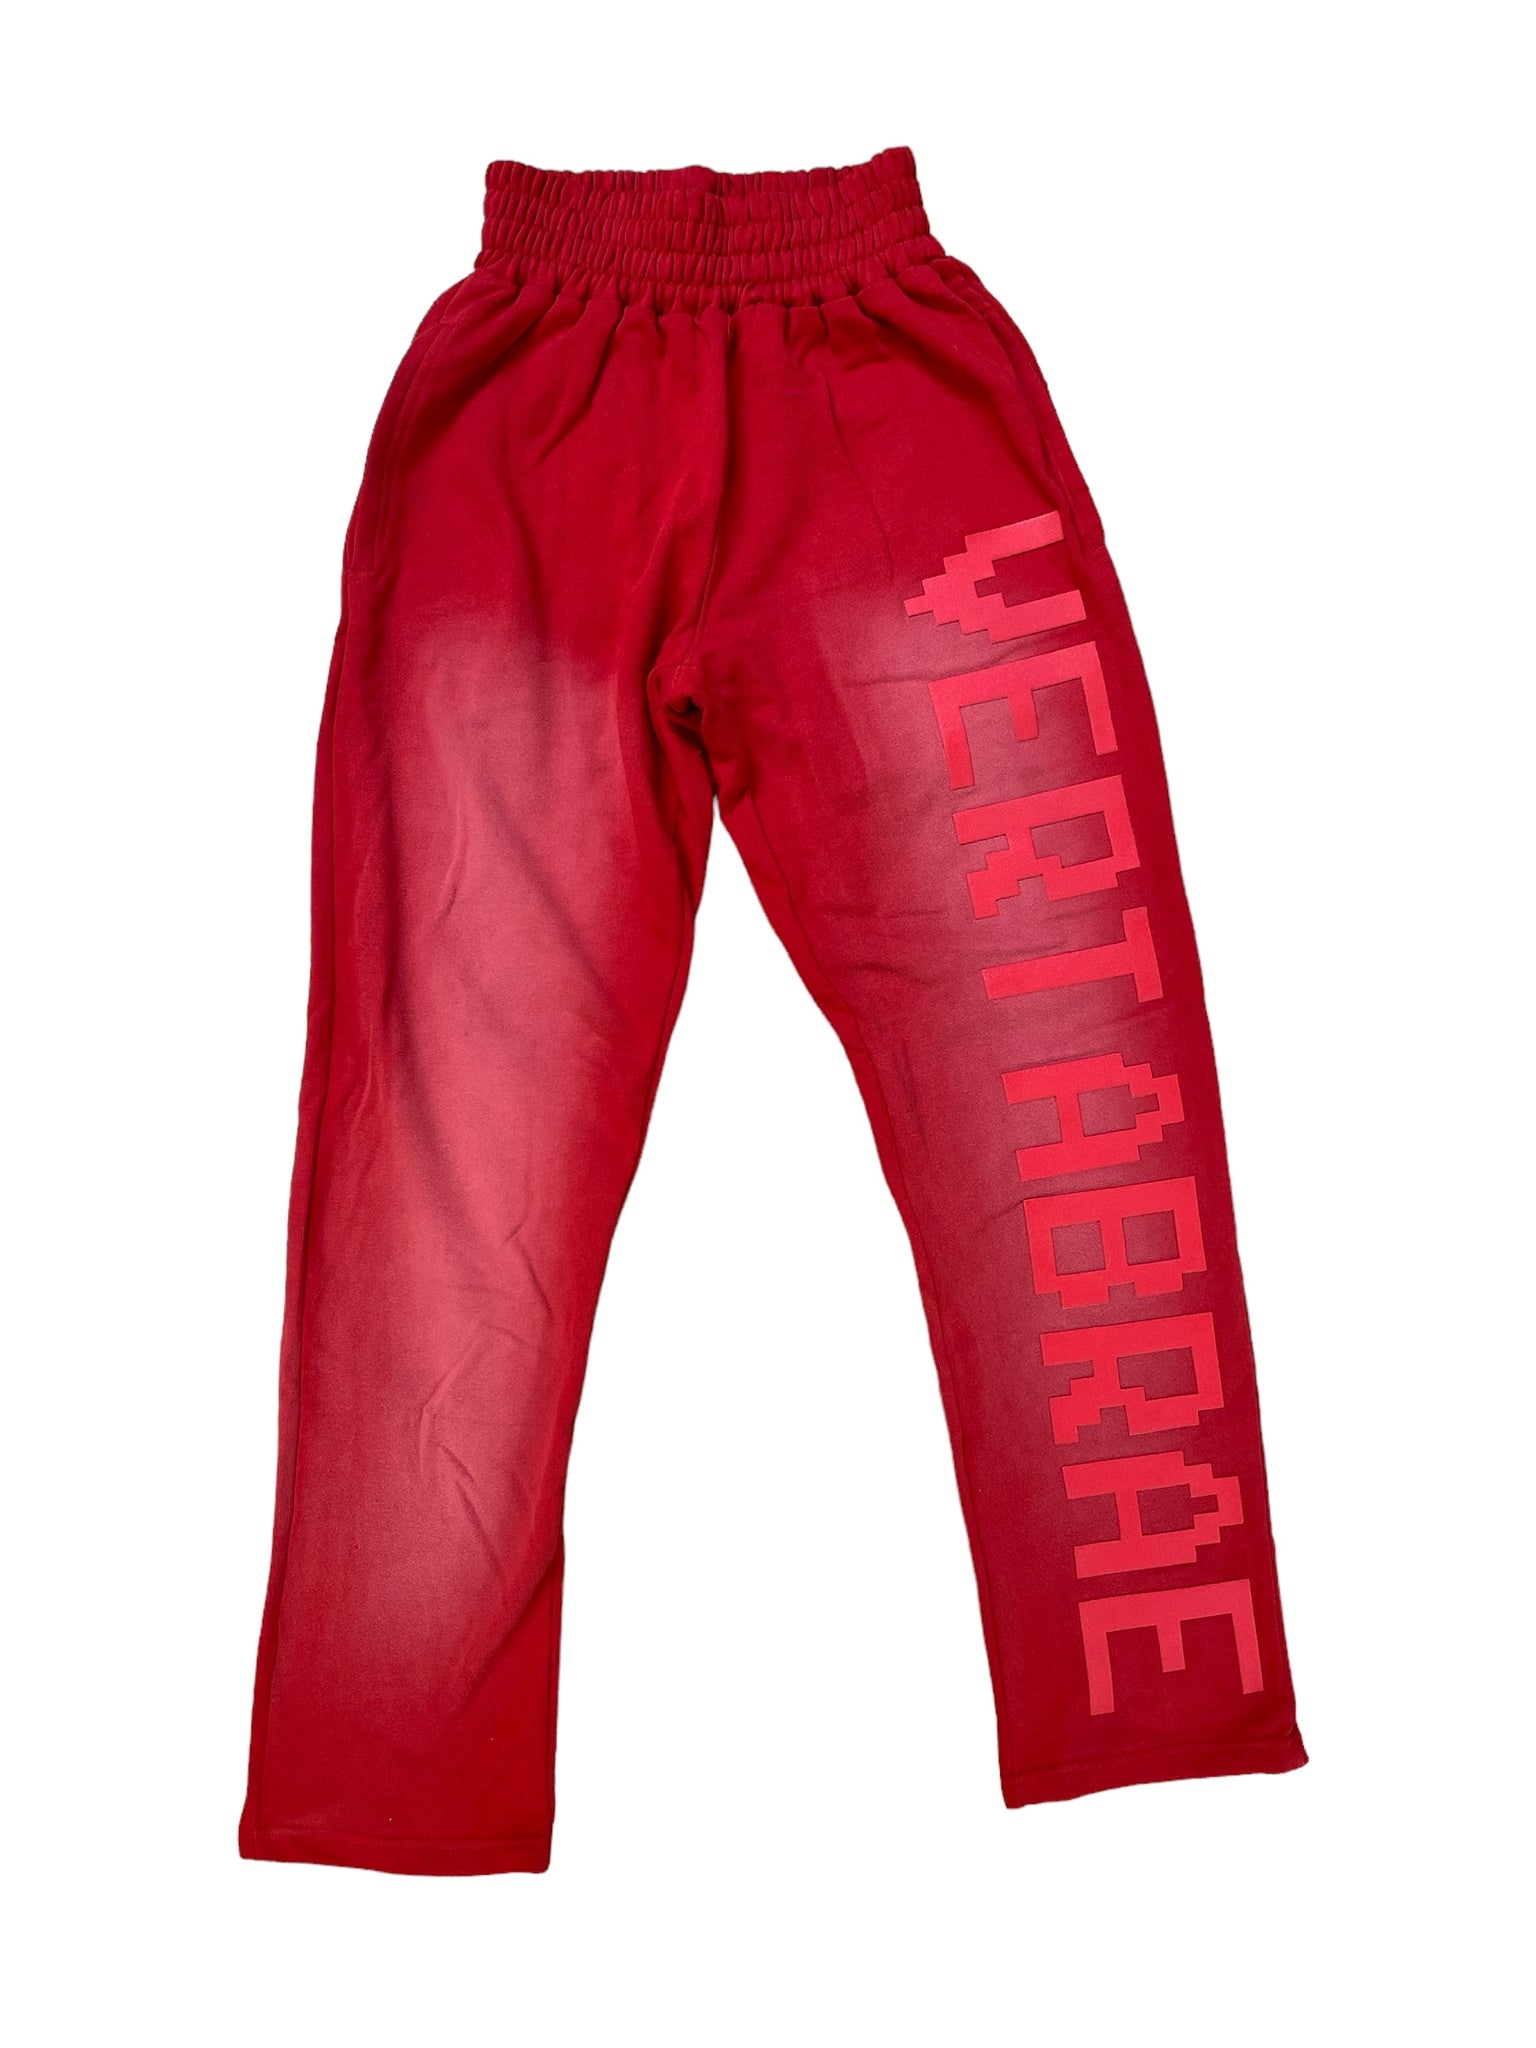 Vertabrae Single Leg Sweatpants "Red on Red"